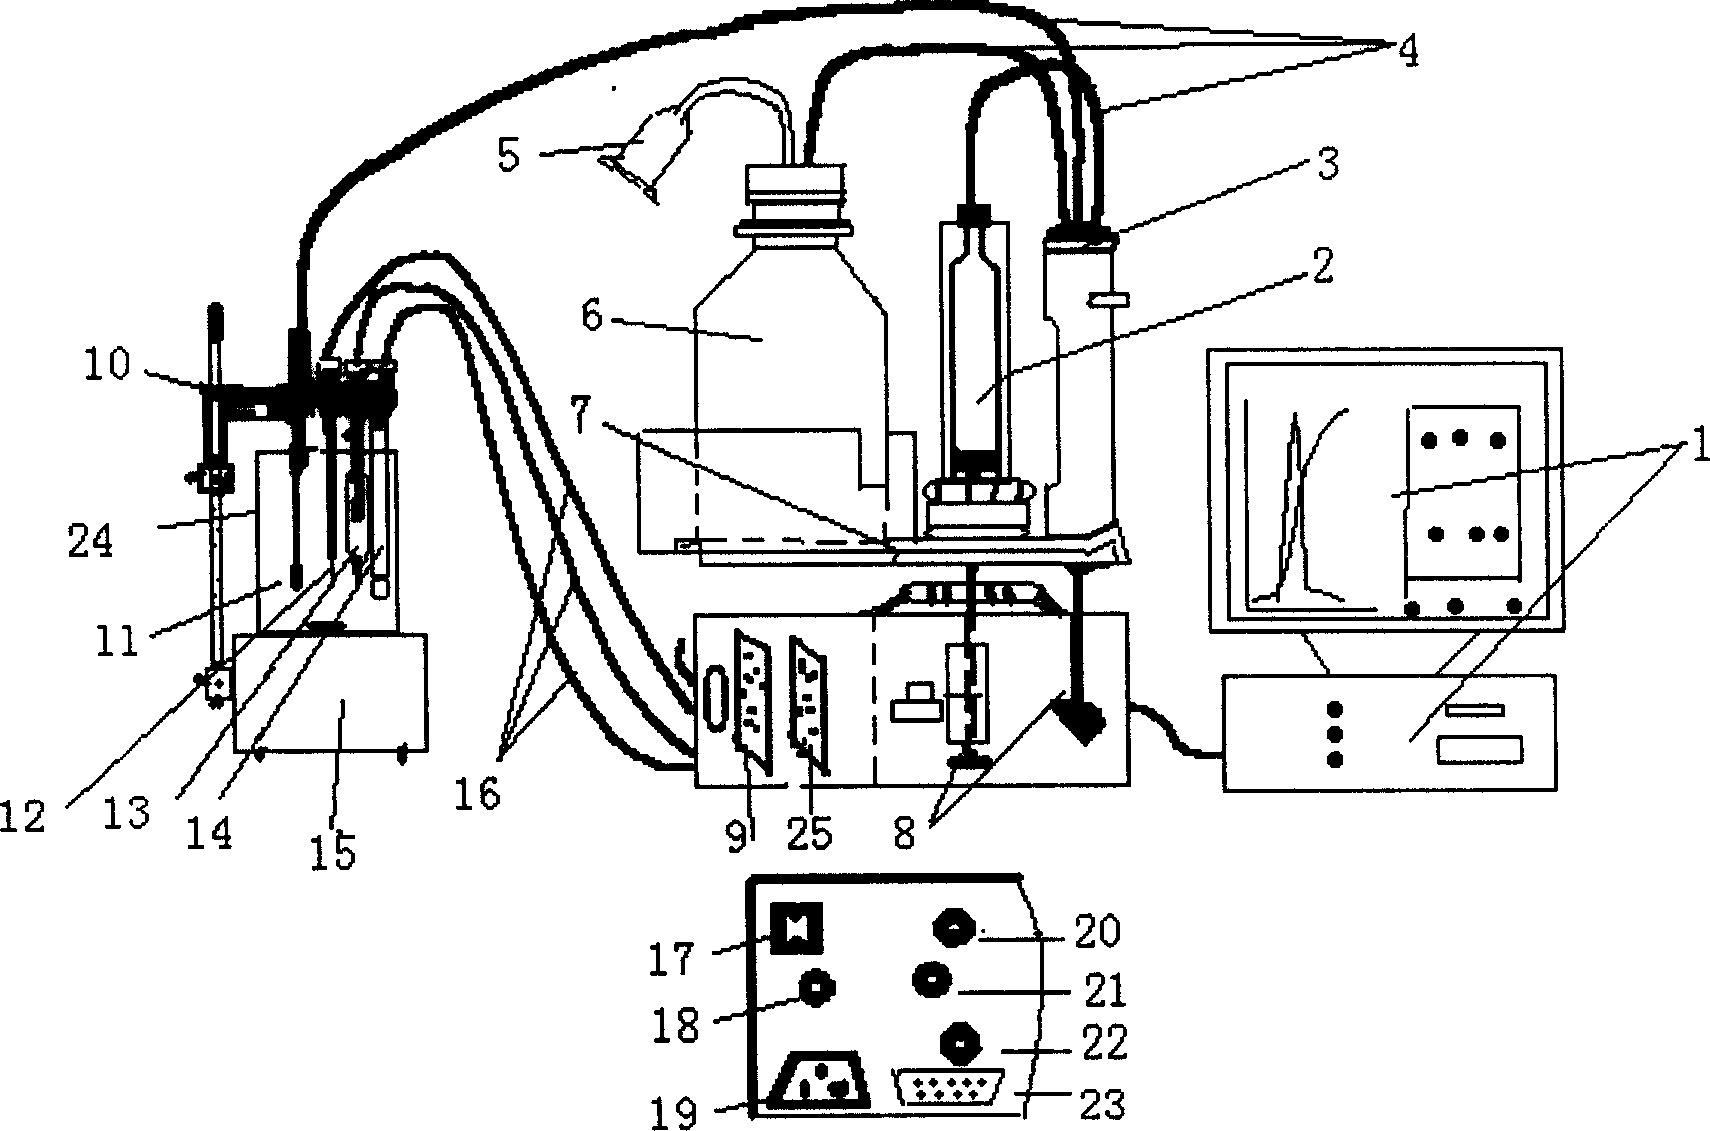 Potentiometric titration instrument